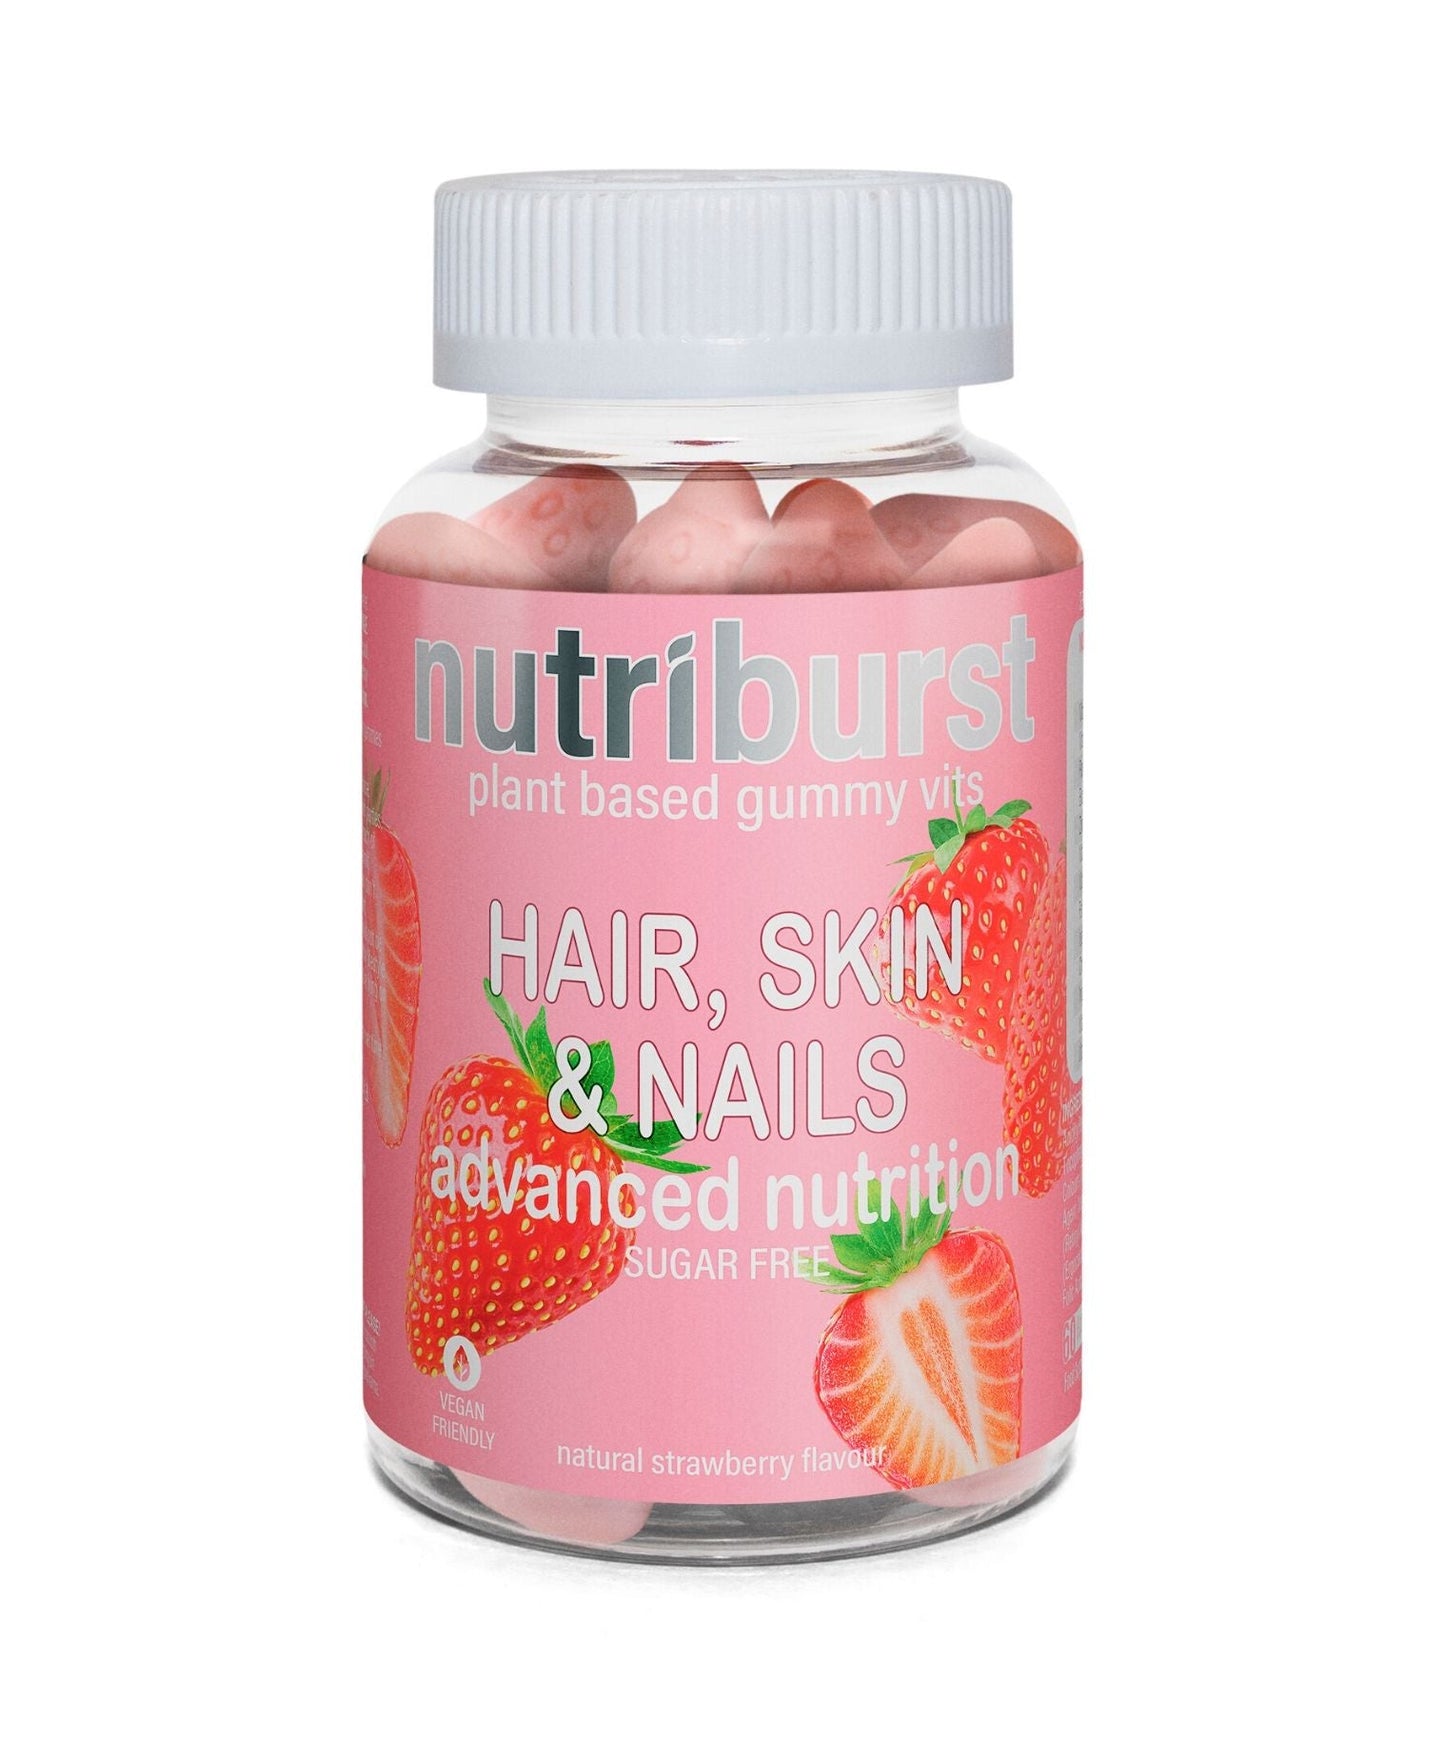 NutriBurst Hair, Skin & Nails Advanced Nutrition Sugar Free 60 Gummies